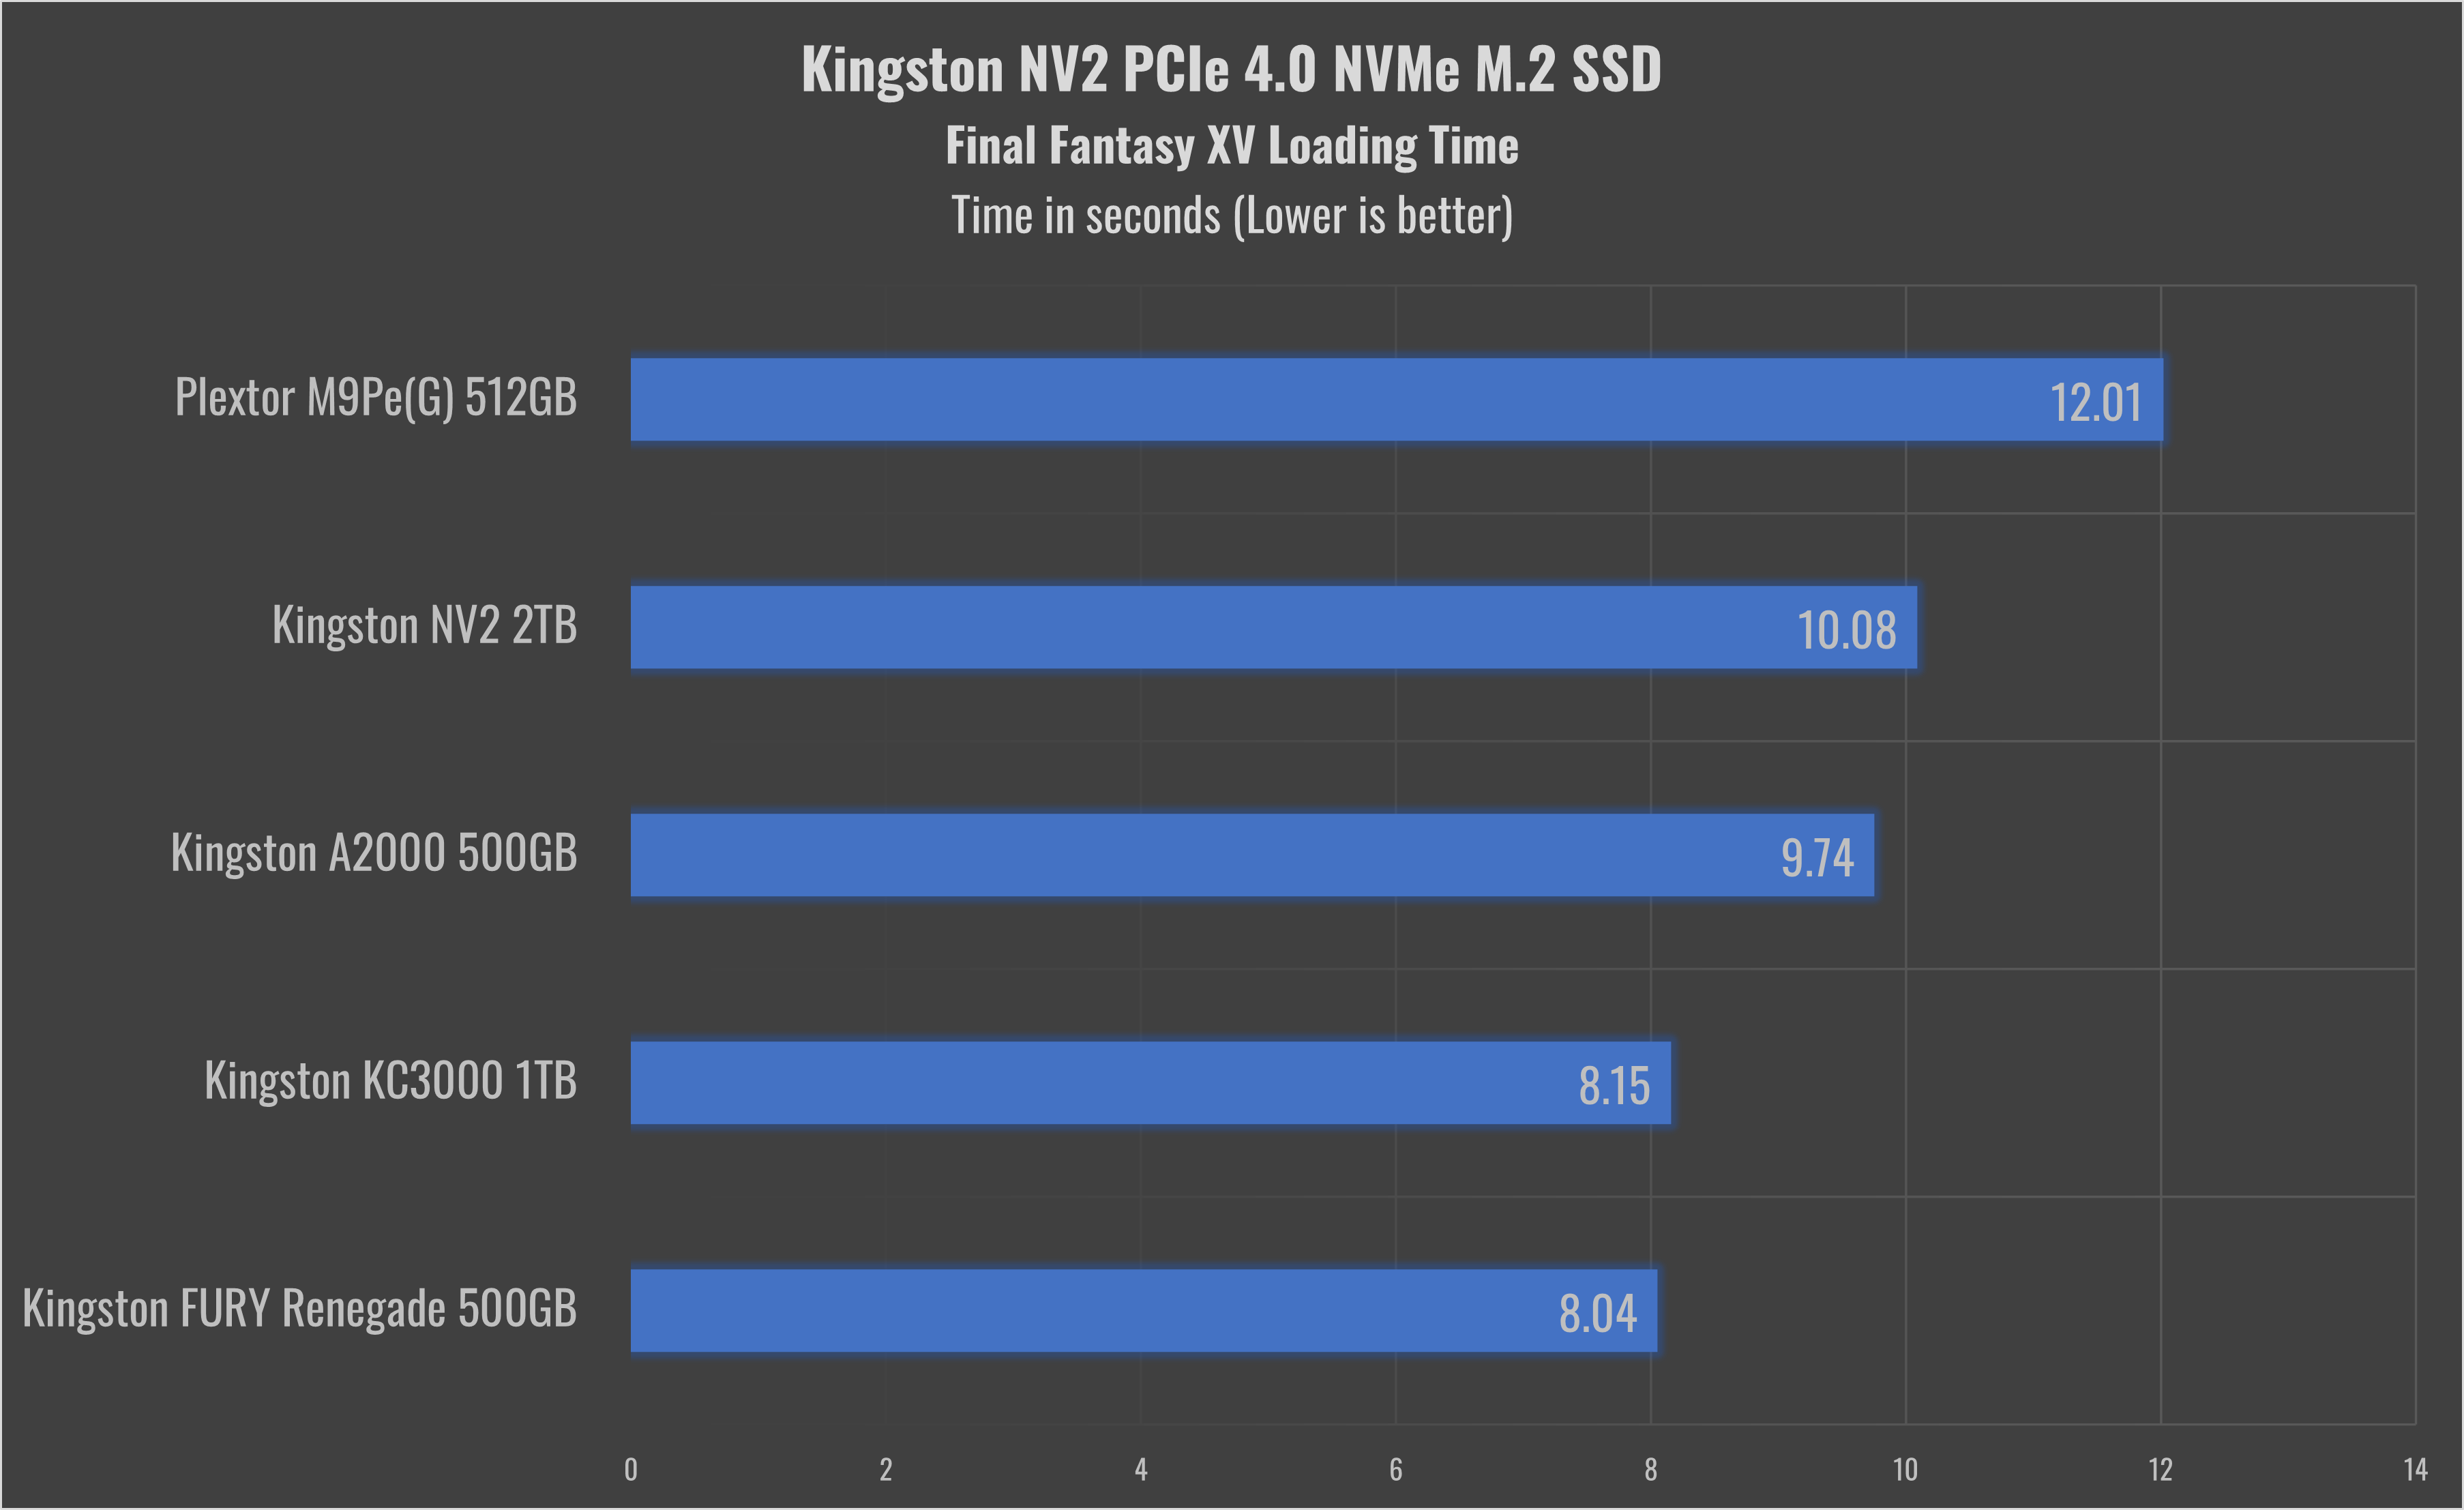 Kingston tops list for channel SSD shipments